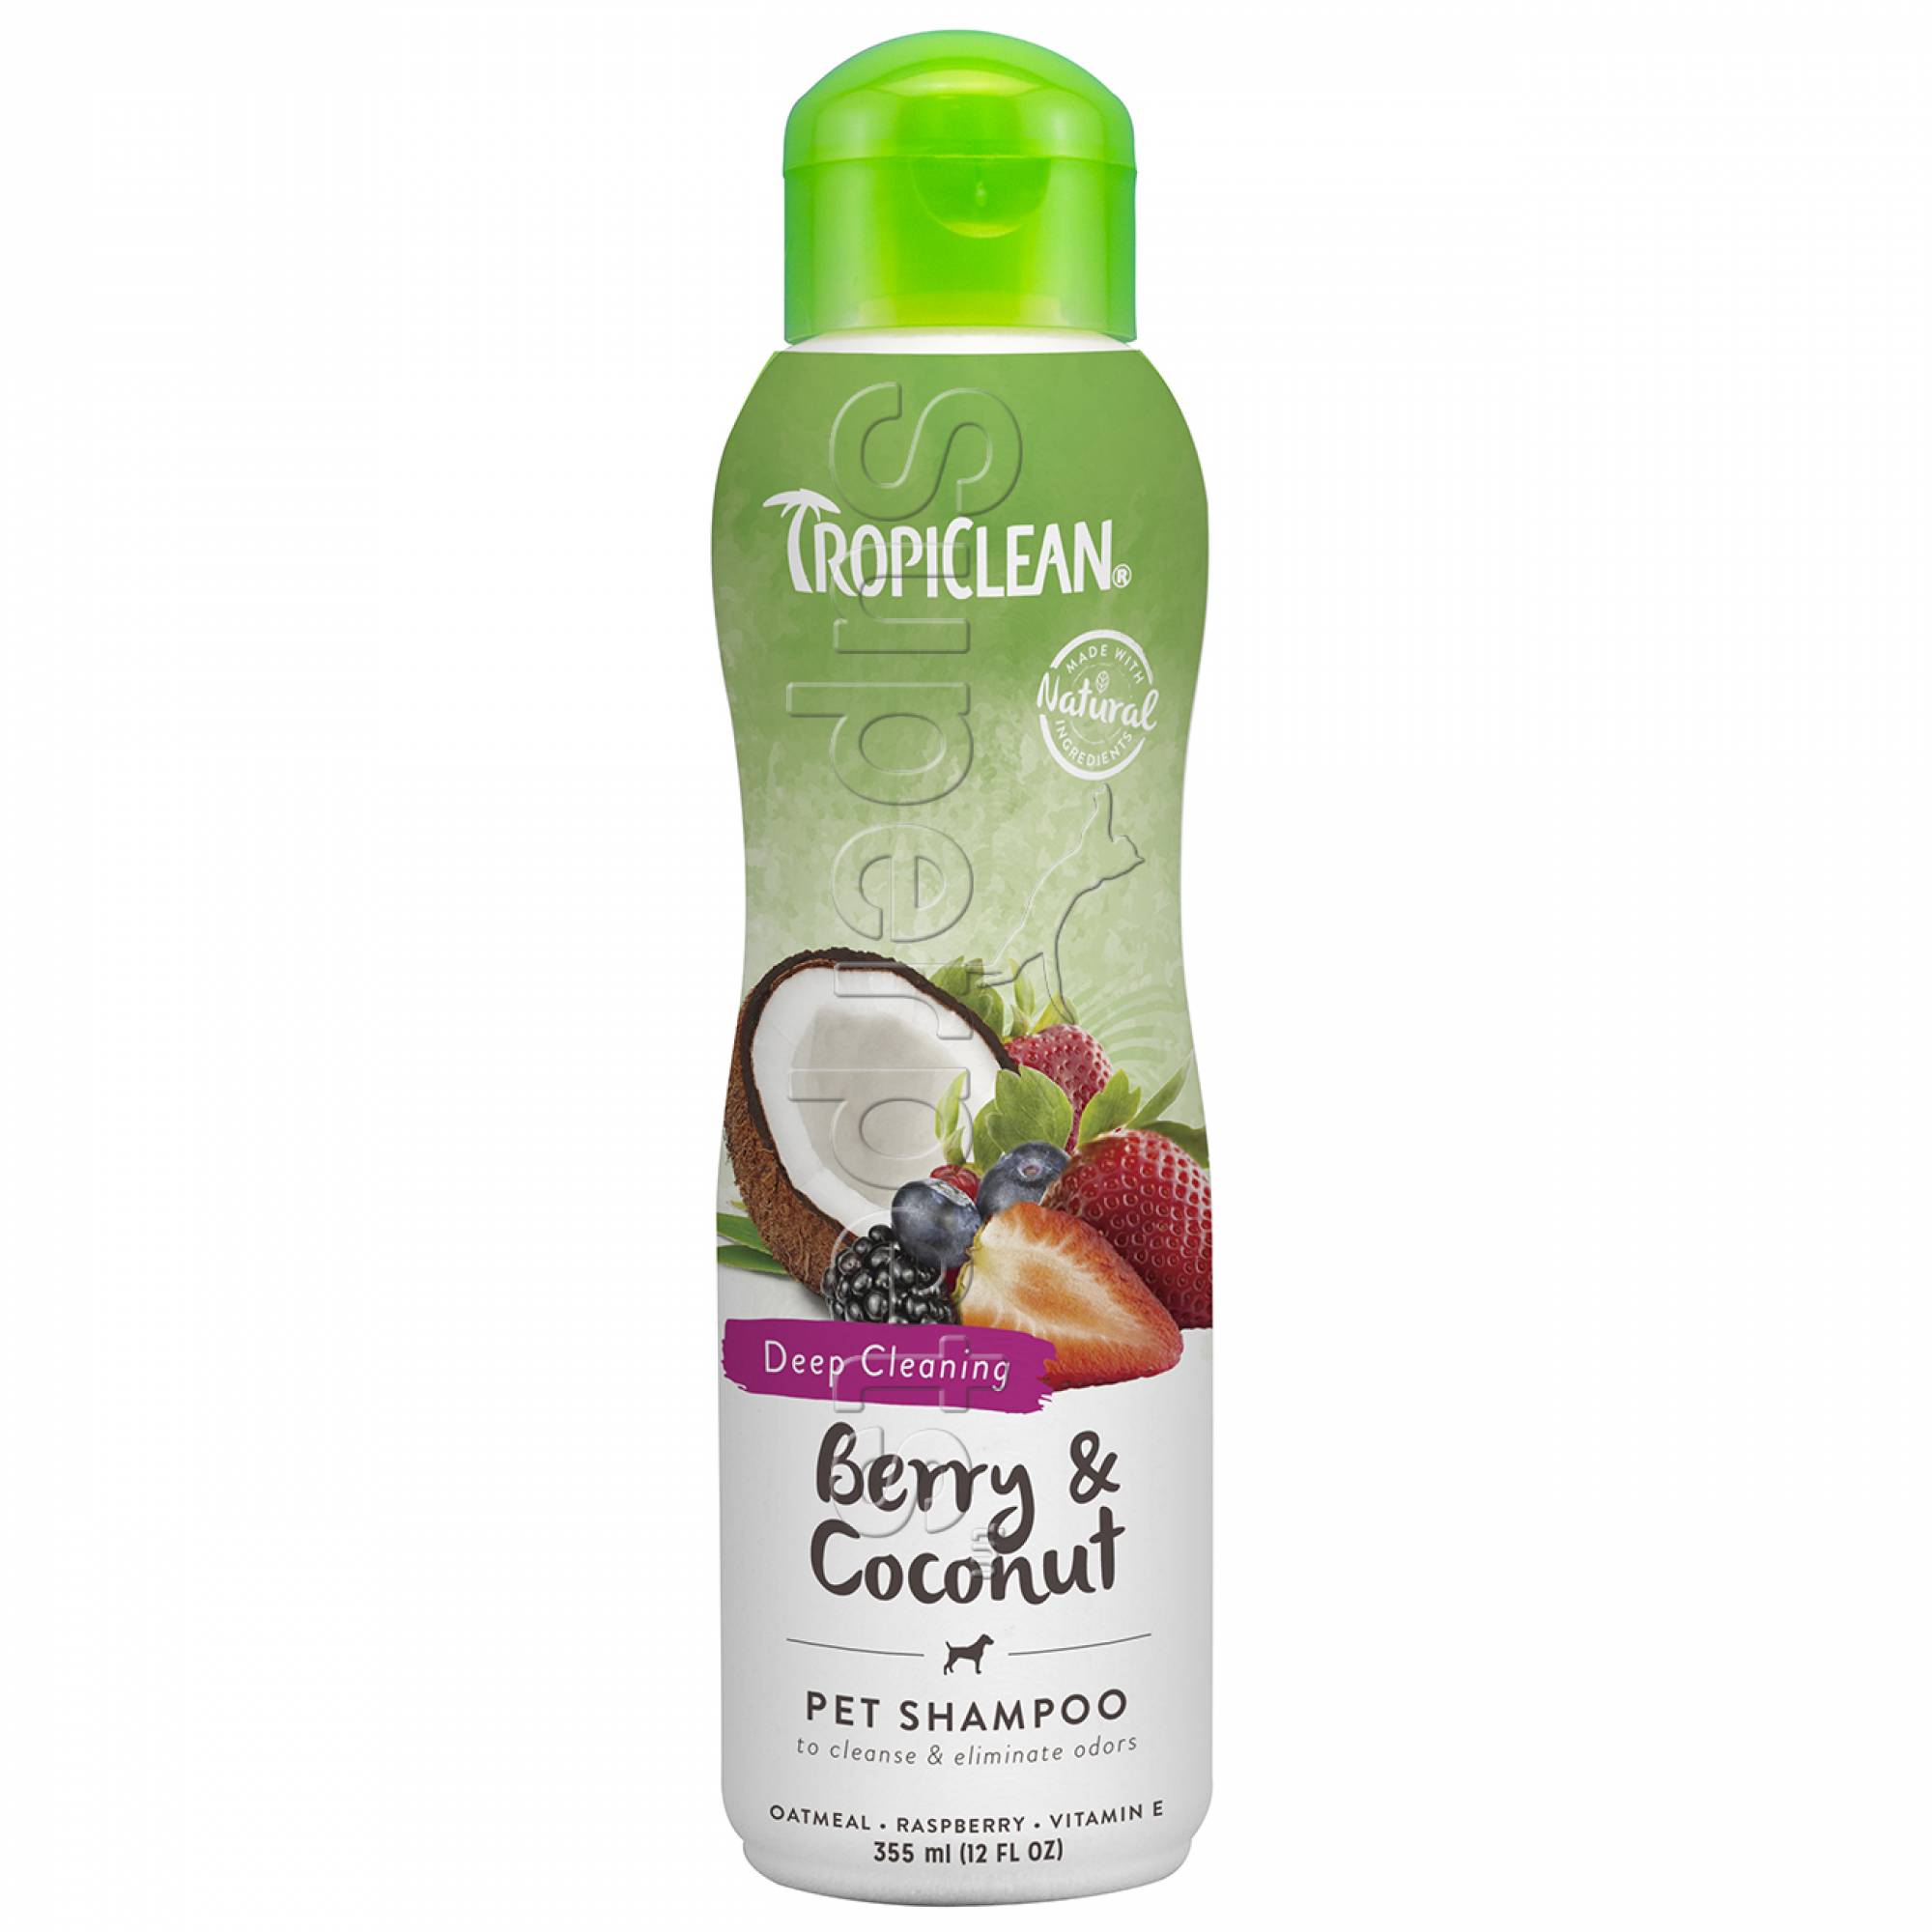 Tropiclean Deep Cleaning Berry & Coconut Pet Shampoo 12oz (355ml)